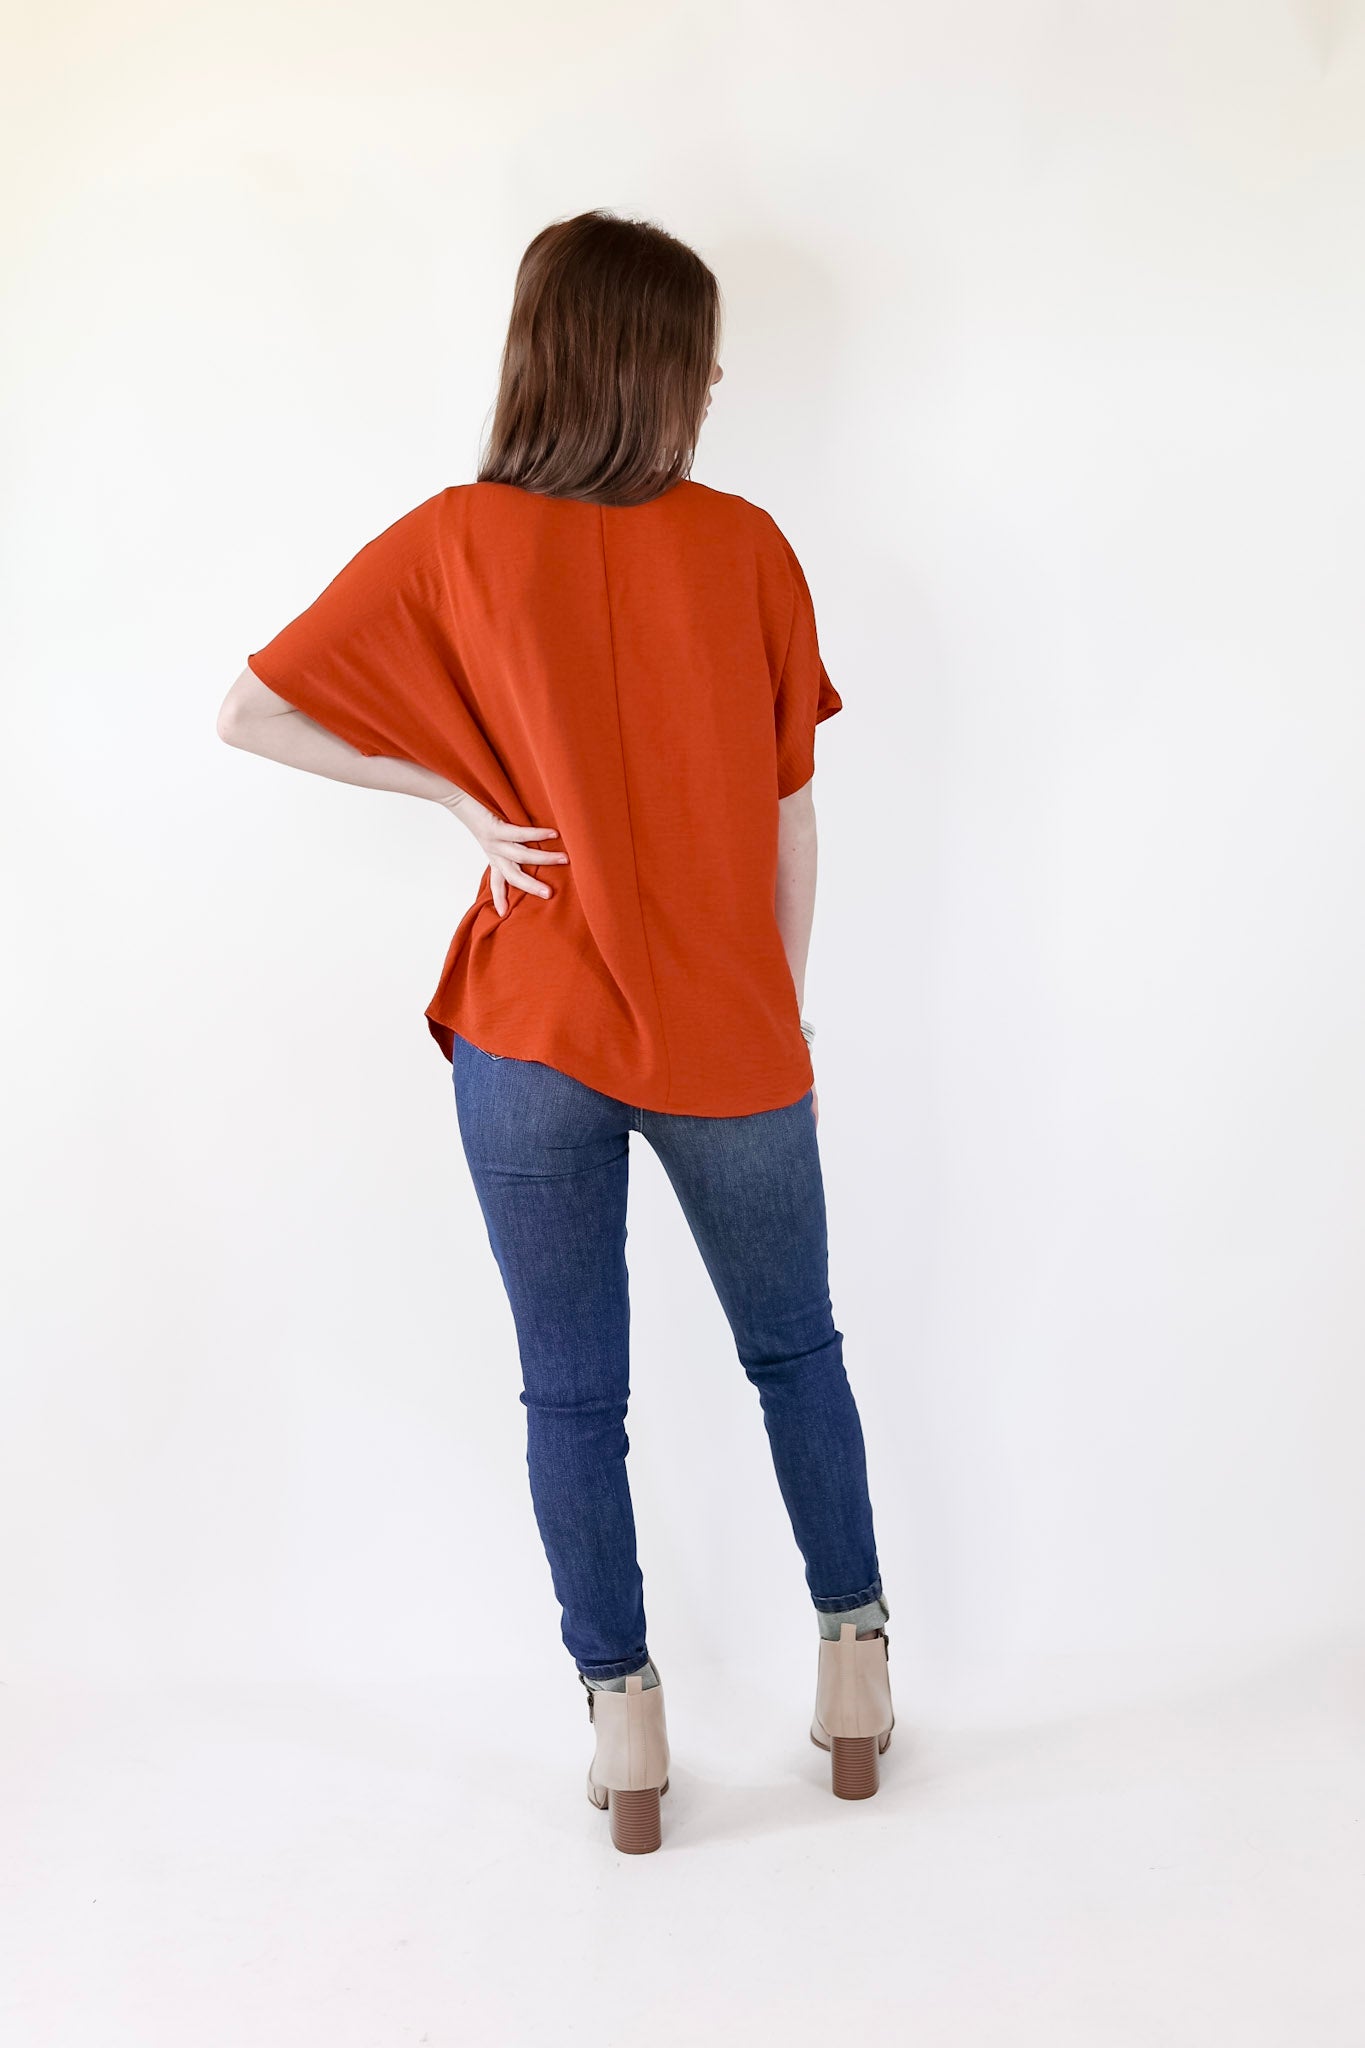 Lovely Dear V Neck Short Sleeve Solid Top in Rust Orange - Giddy Up Glamour Boutique